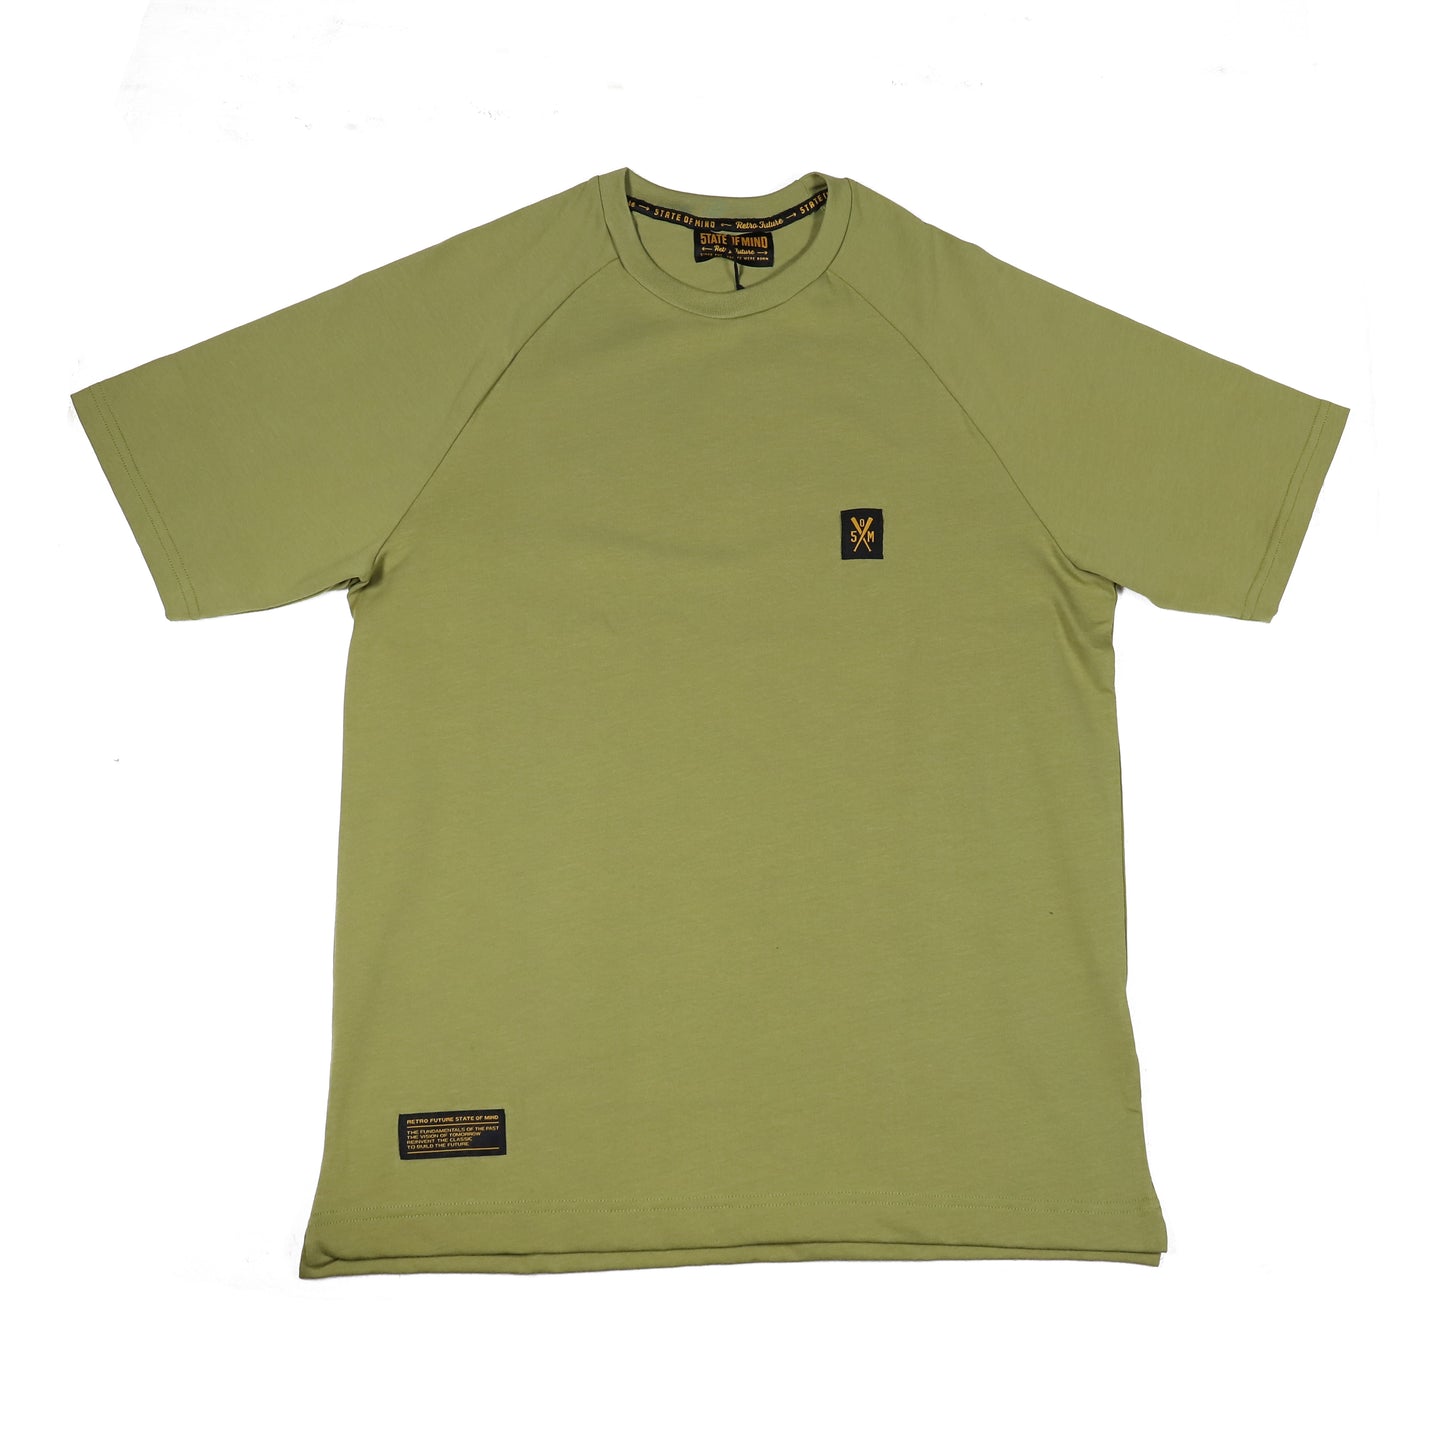 "RETROFUTURE BASIC" military green t-shirt